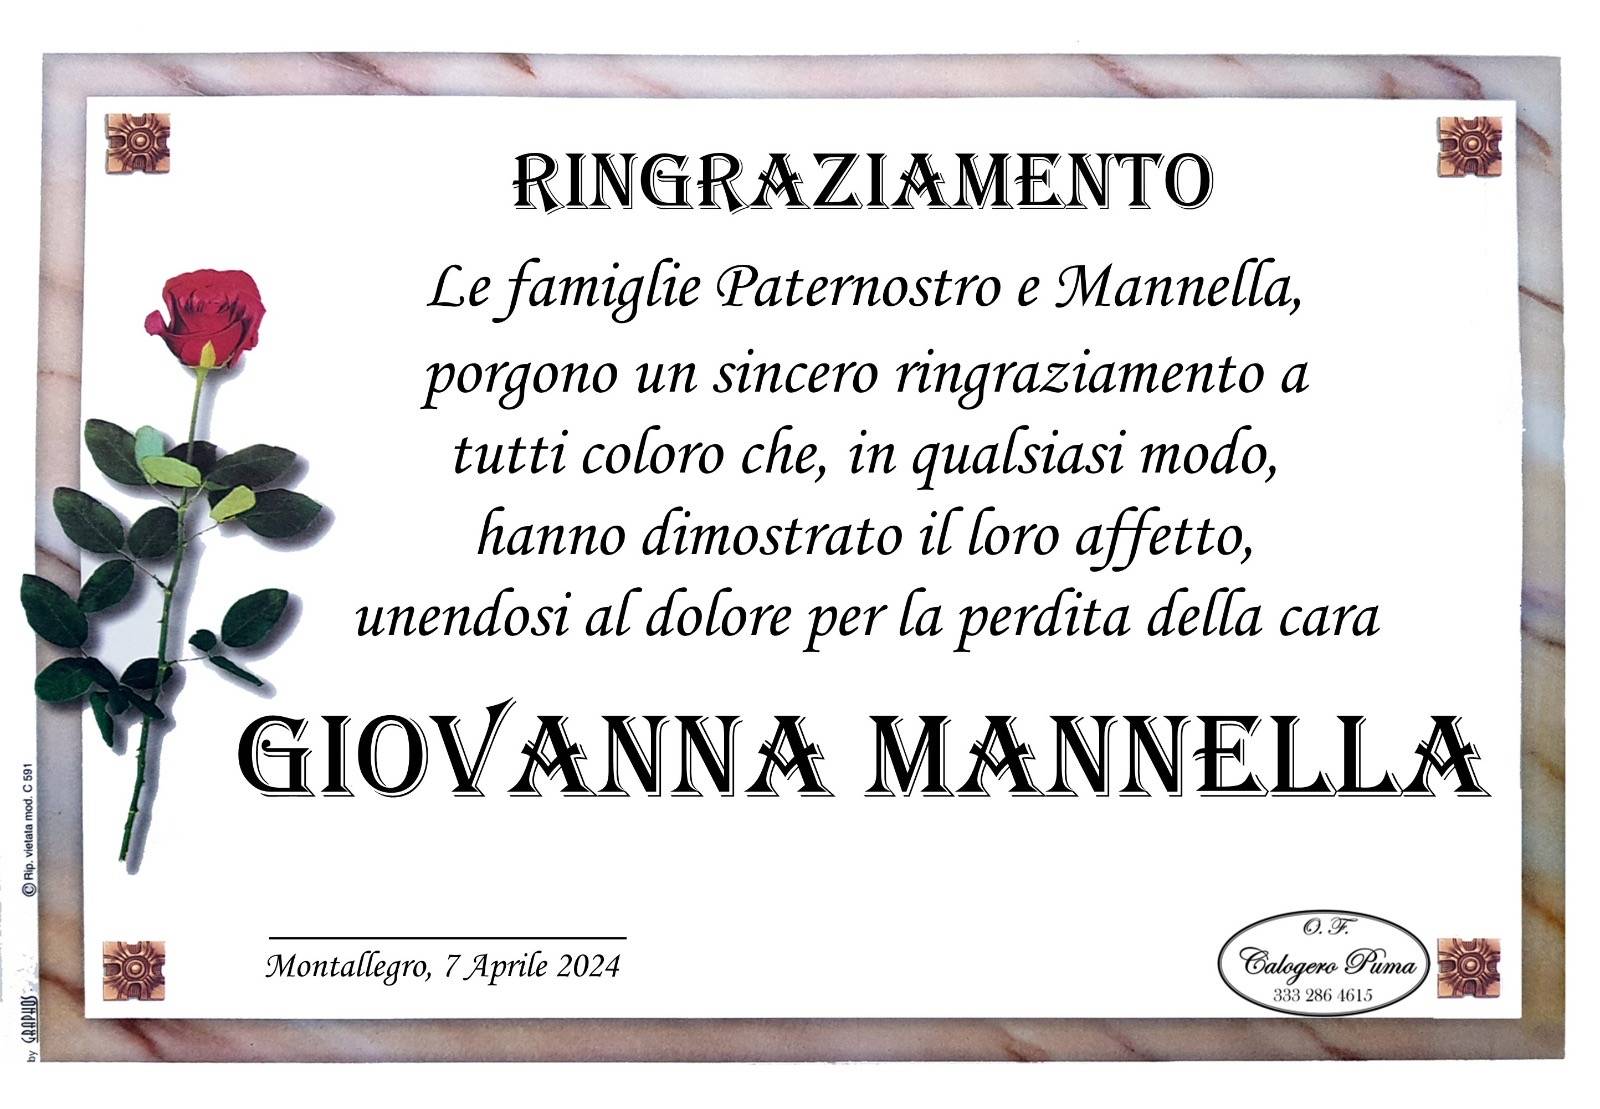 Giovanna Mannella